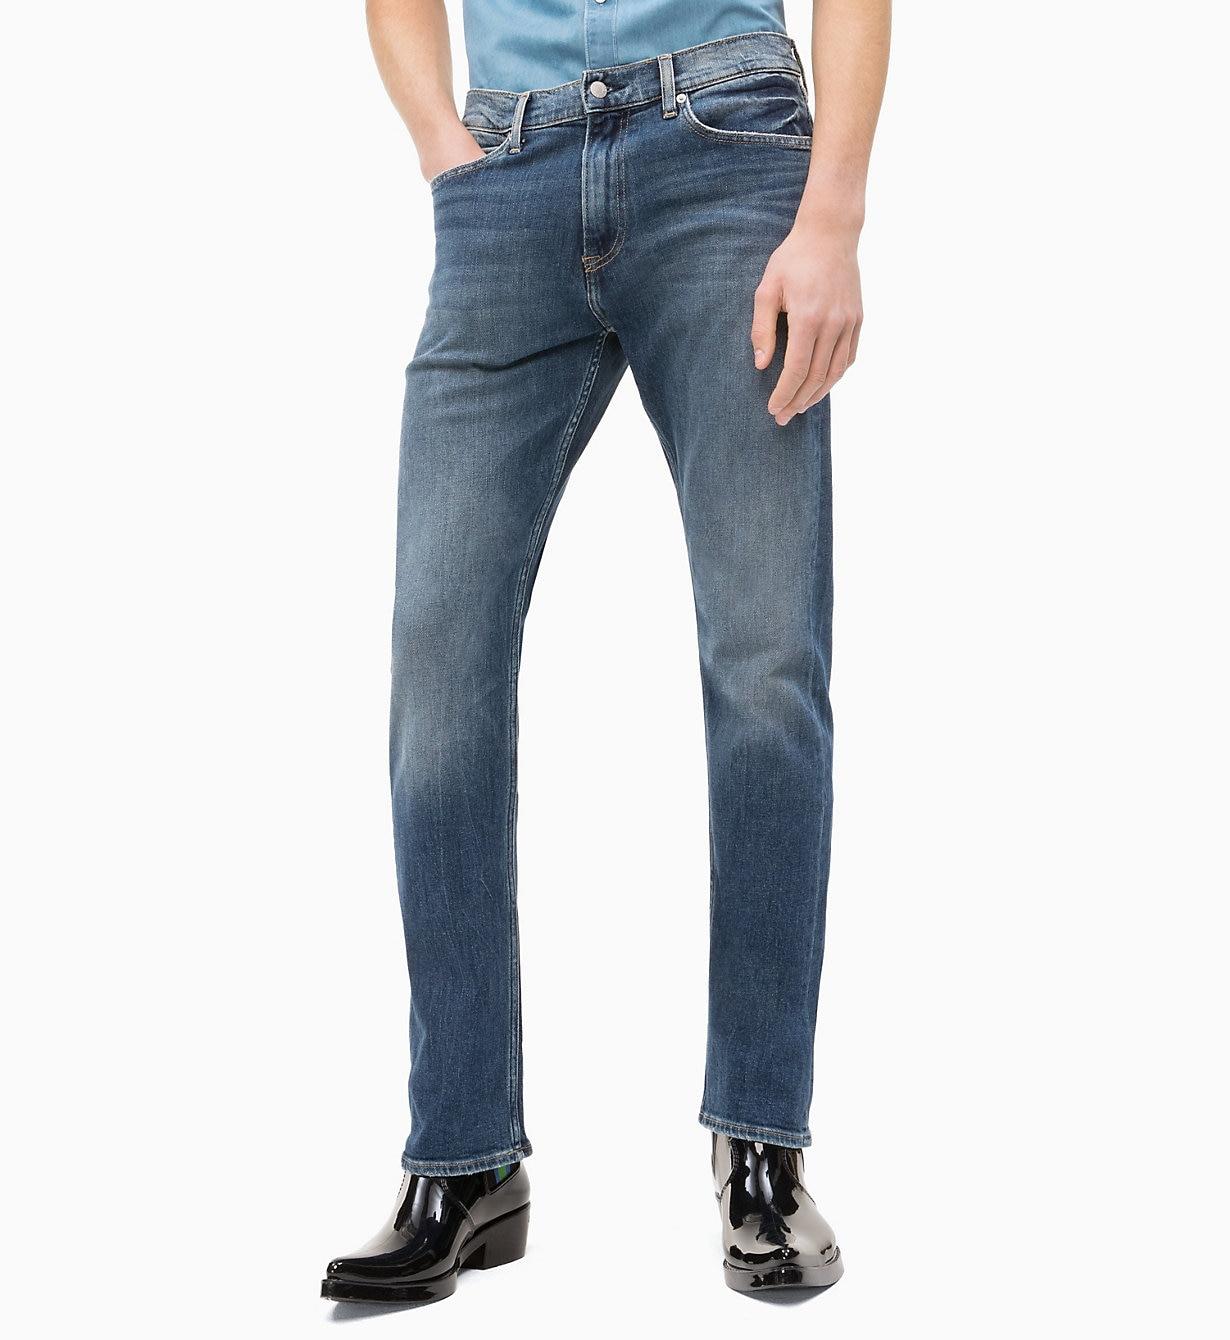 Calvin Klein Denim Ckj 035 Straight Jeans in Denim (Blue) for Men - Lyst